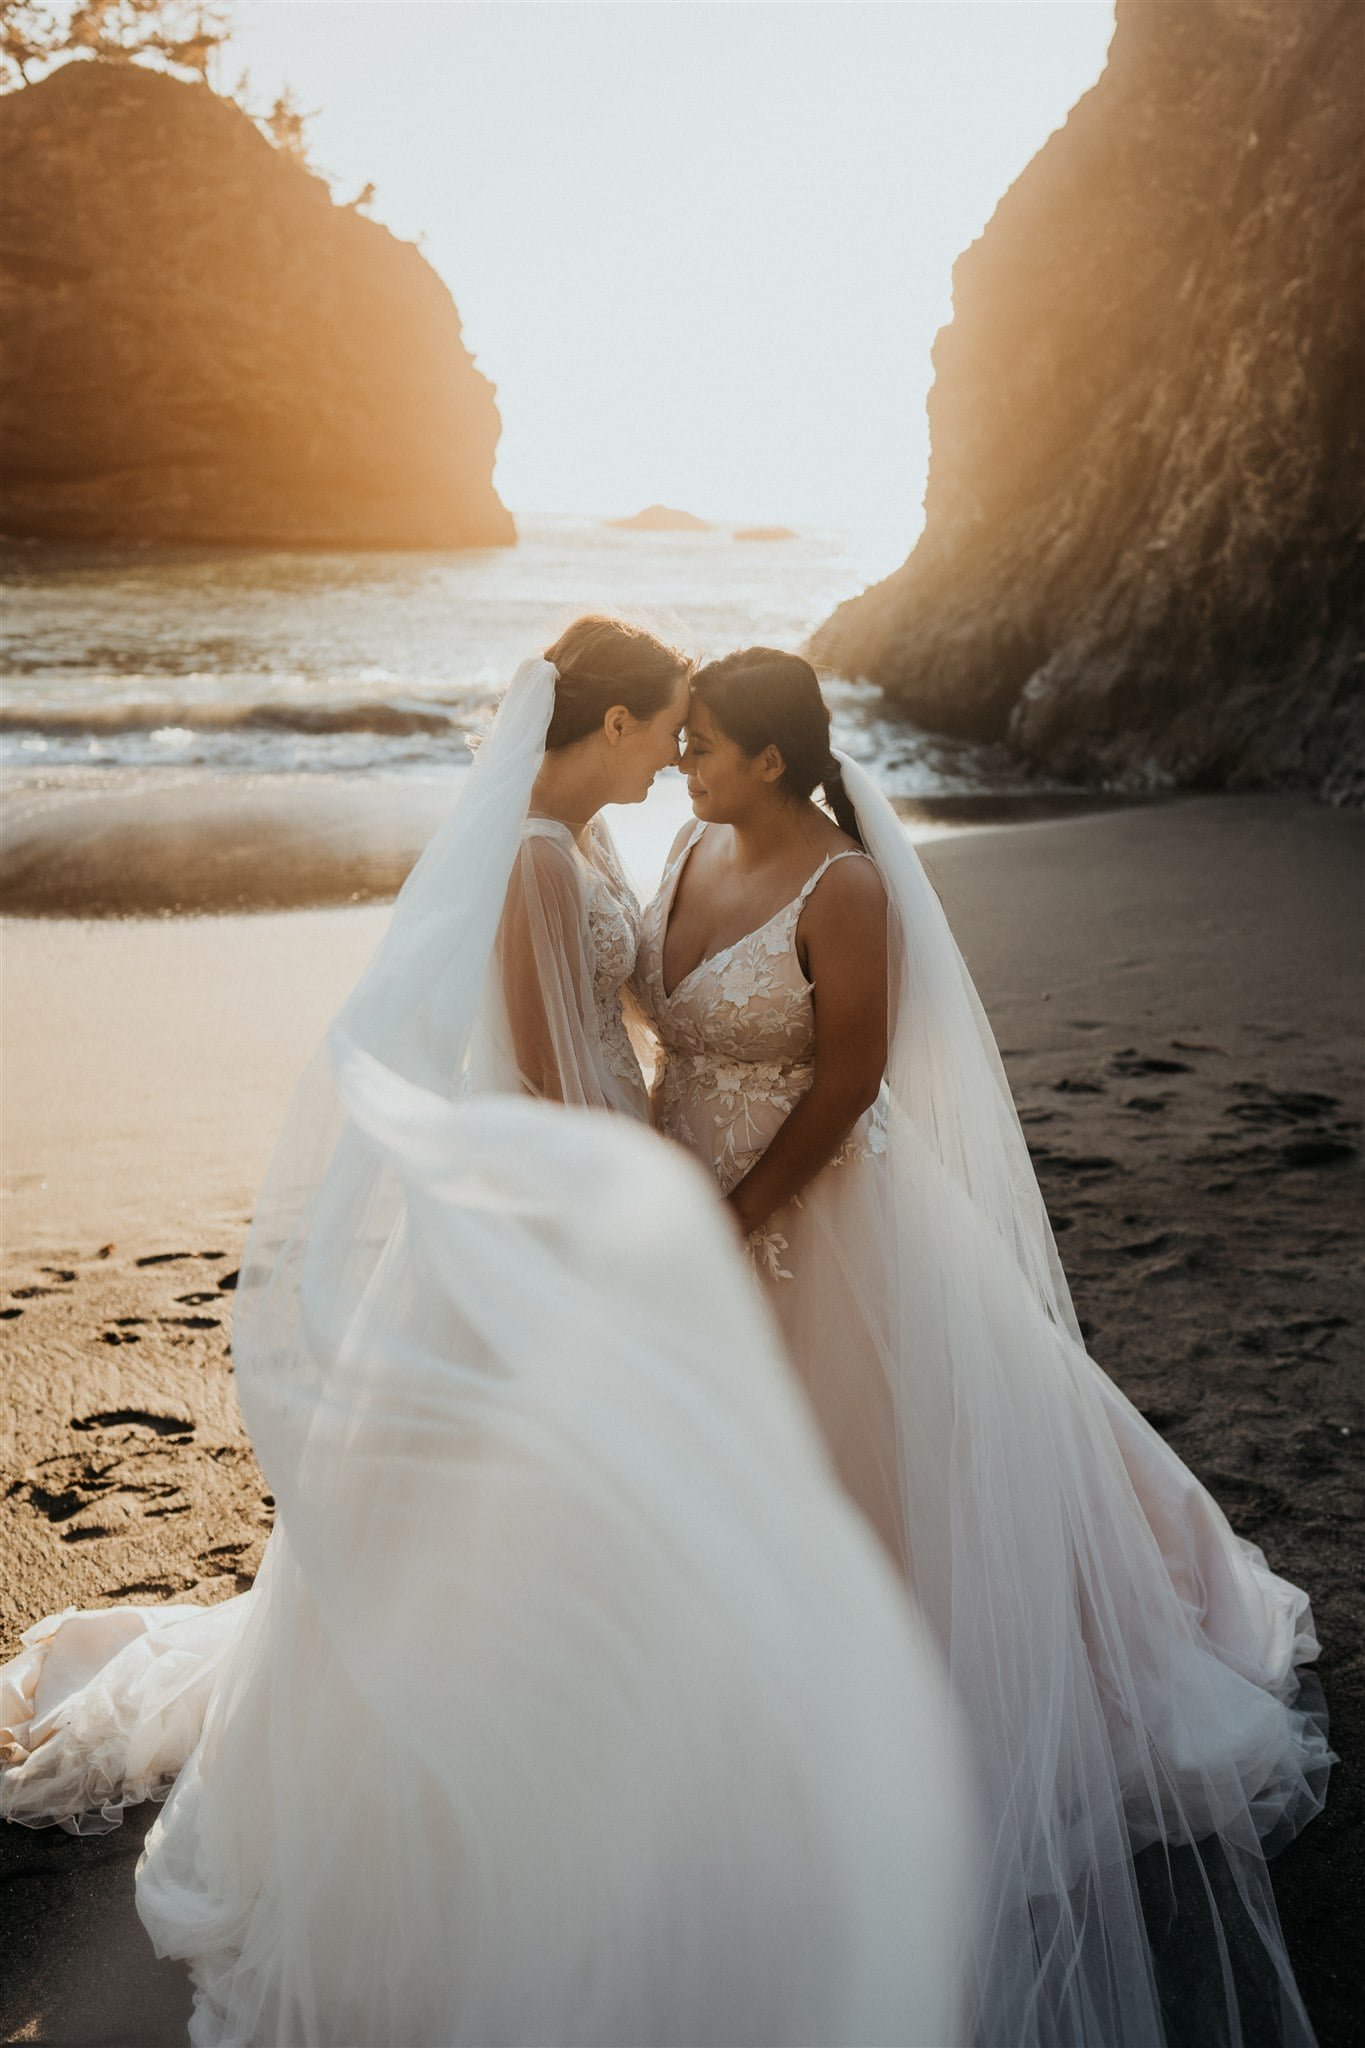 Sunset bridal portraits on the beach during Secret Beach, Oregon elopement